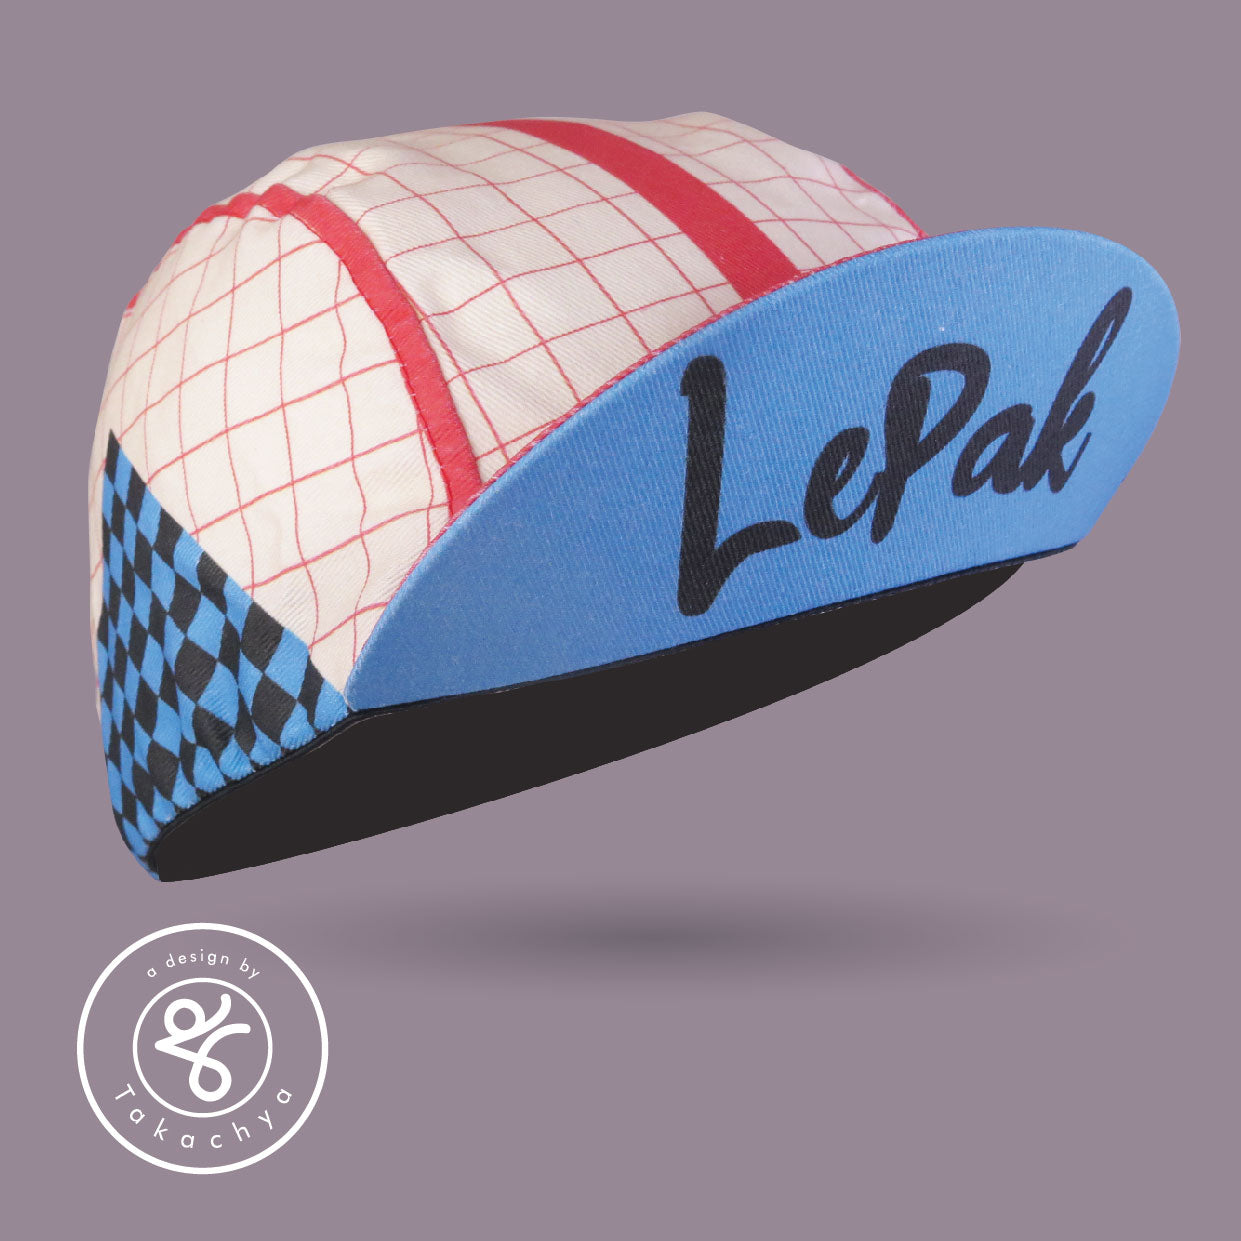 Lepak Tan - A Design by Takachya Cycling Cap